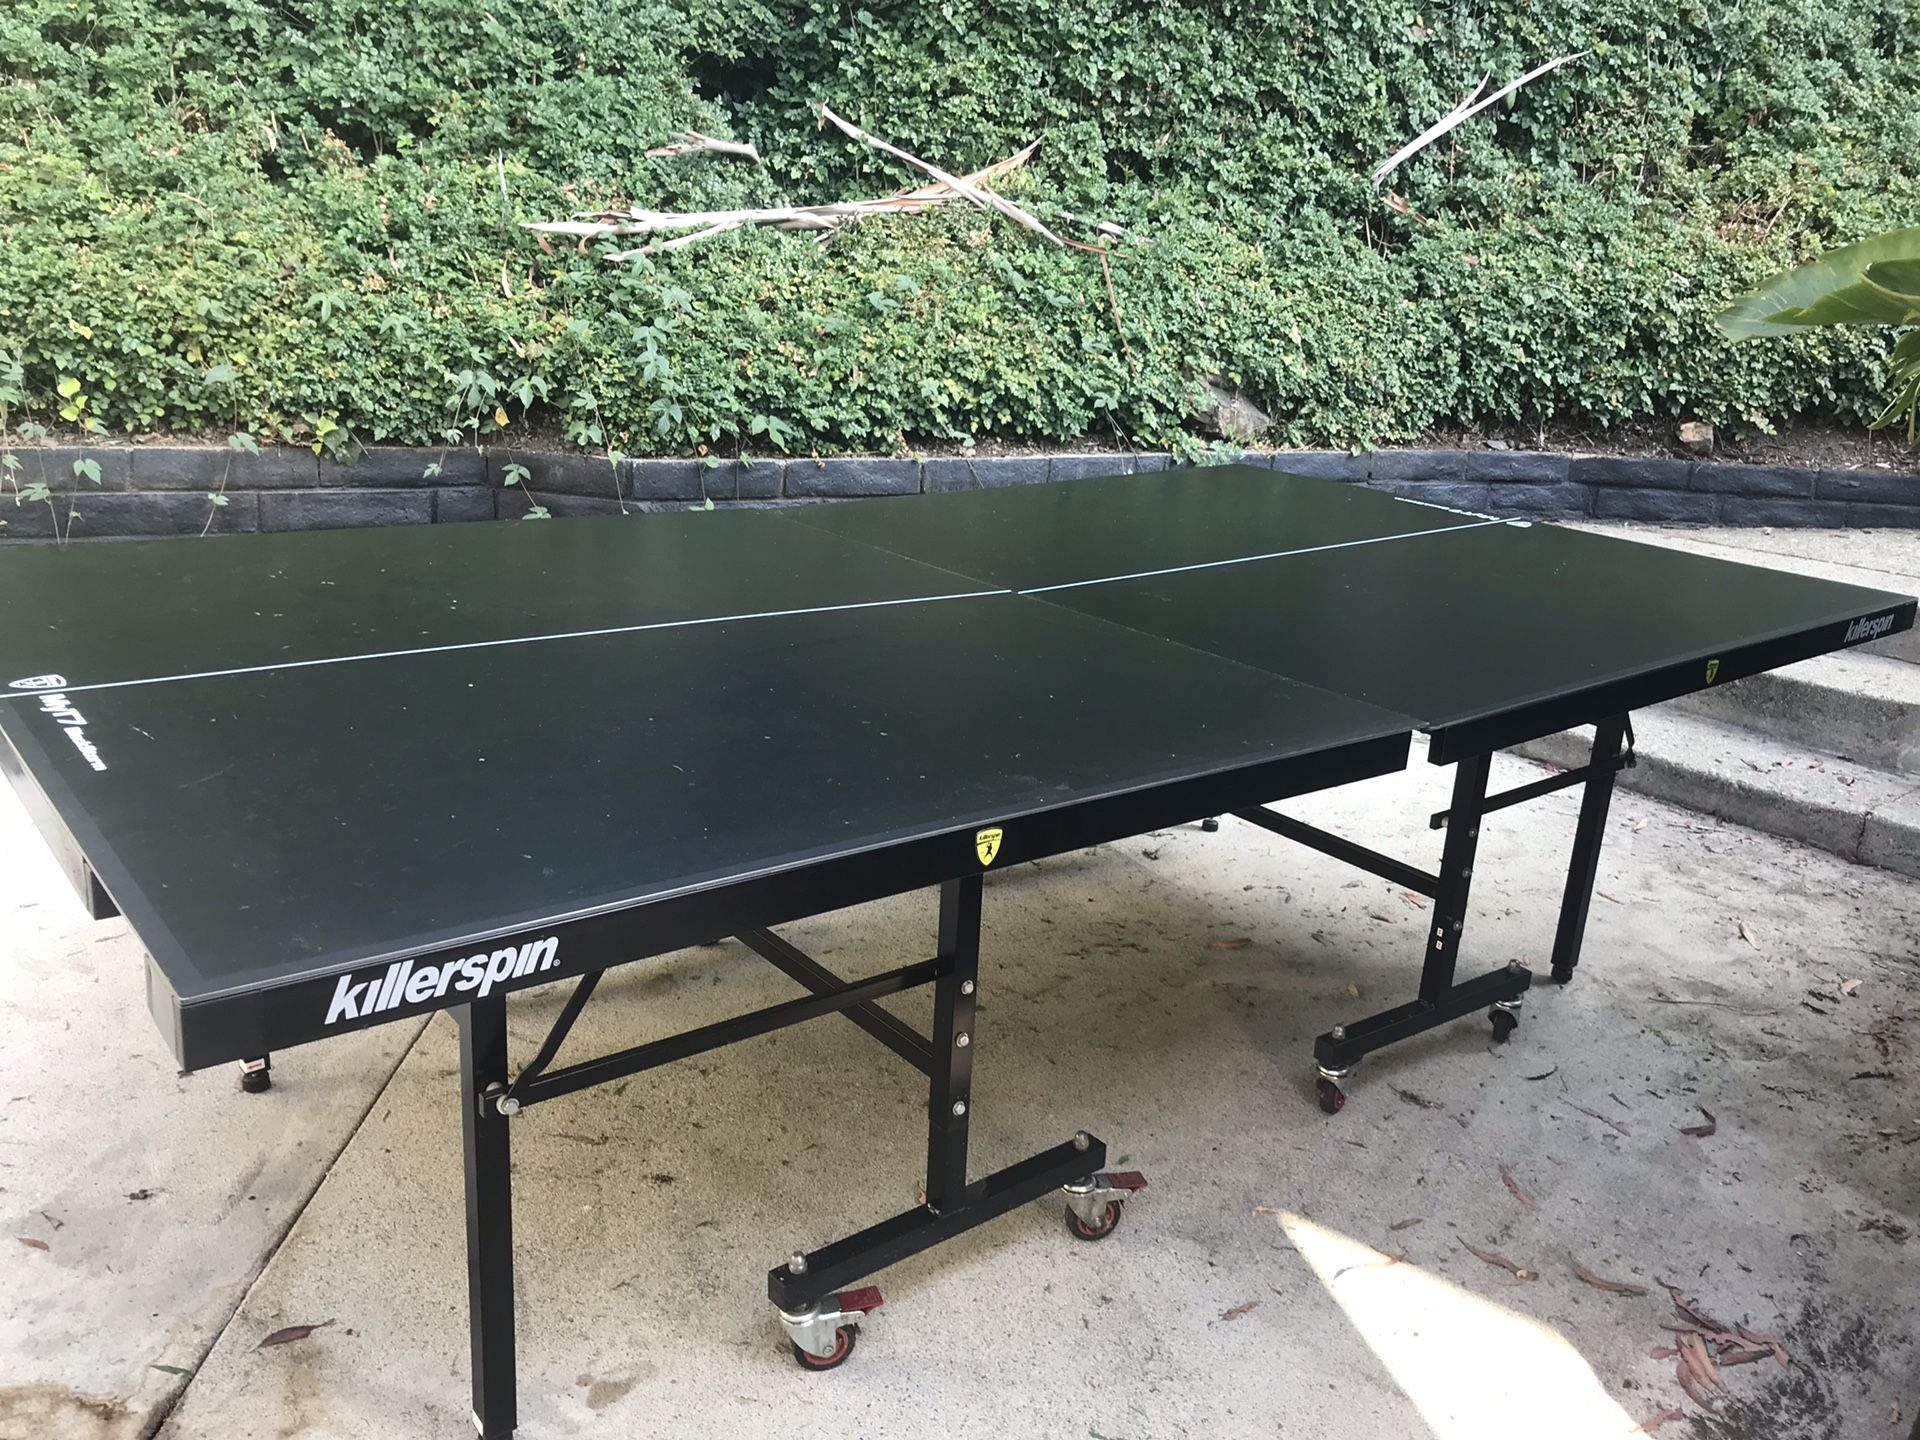 Free KillerSpin Ping Pong Table